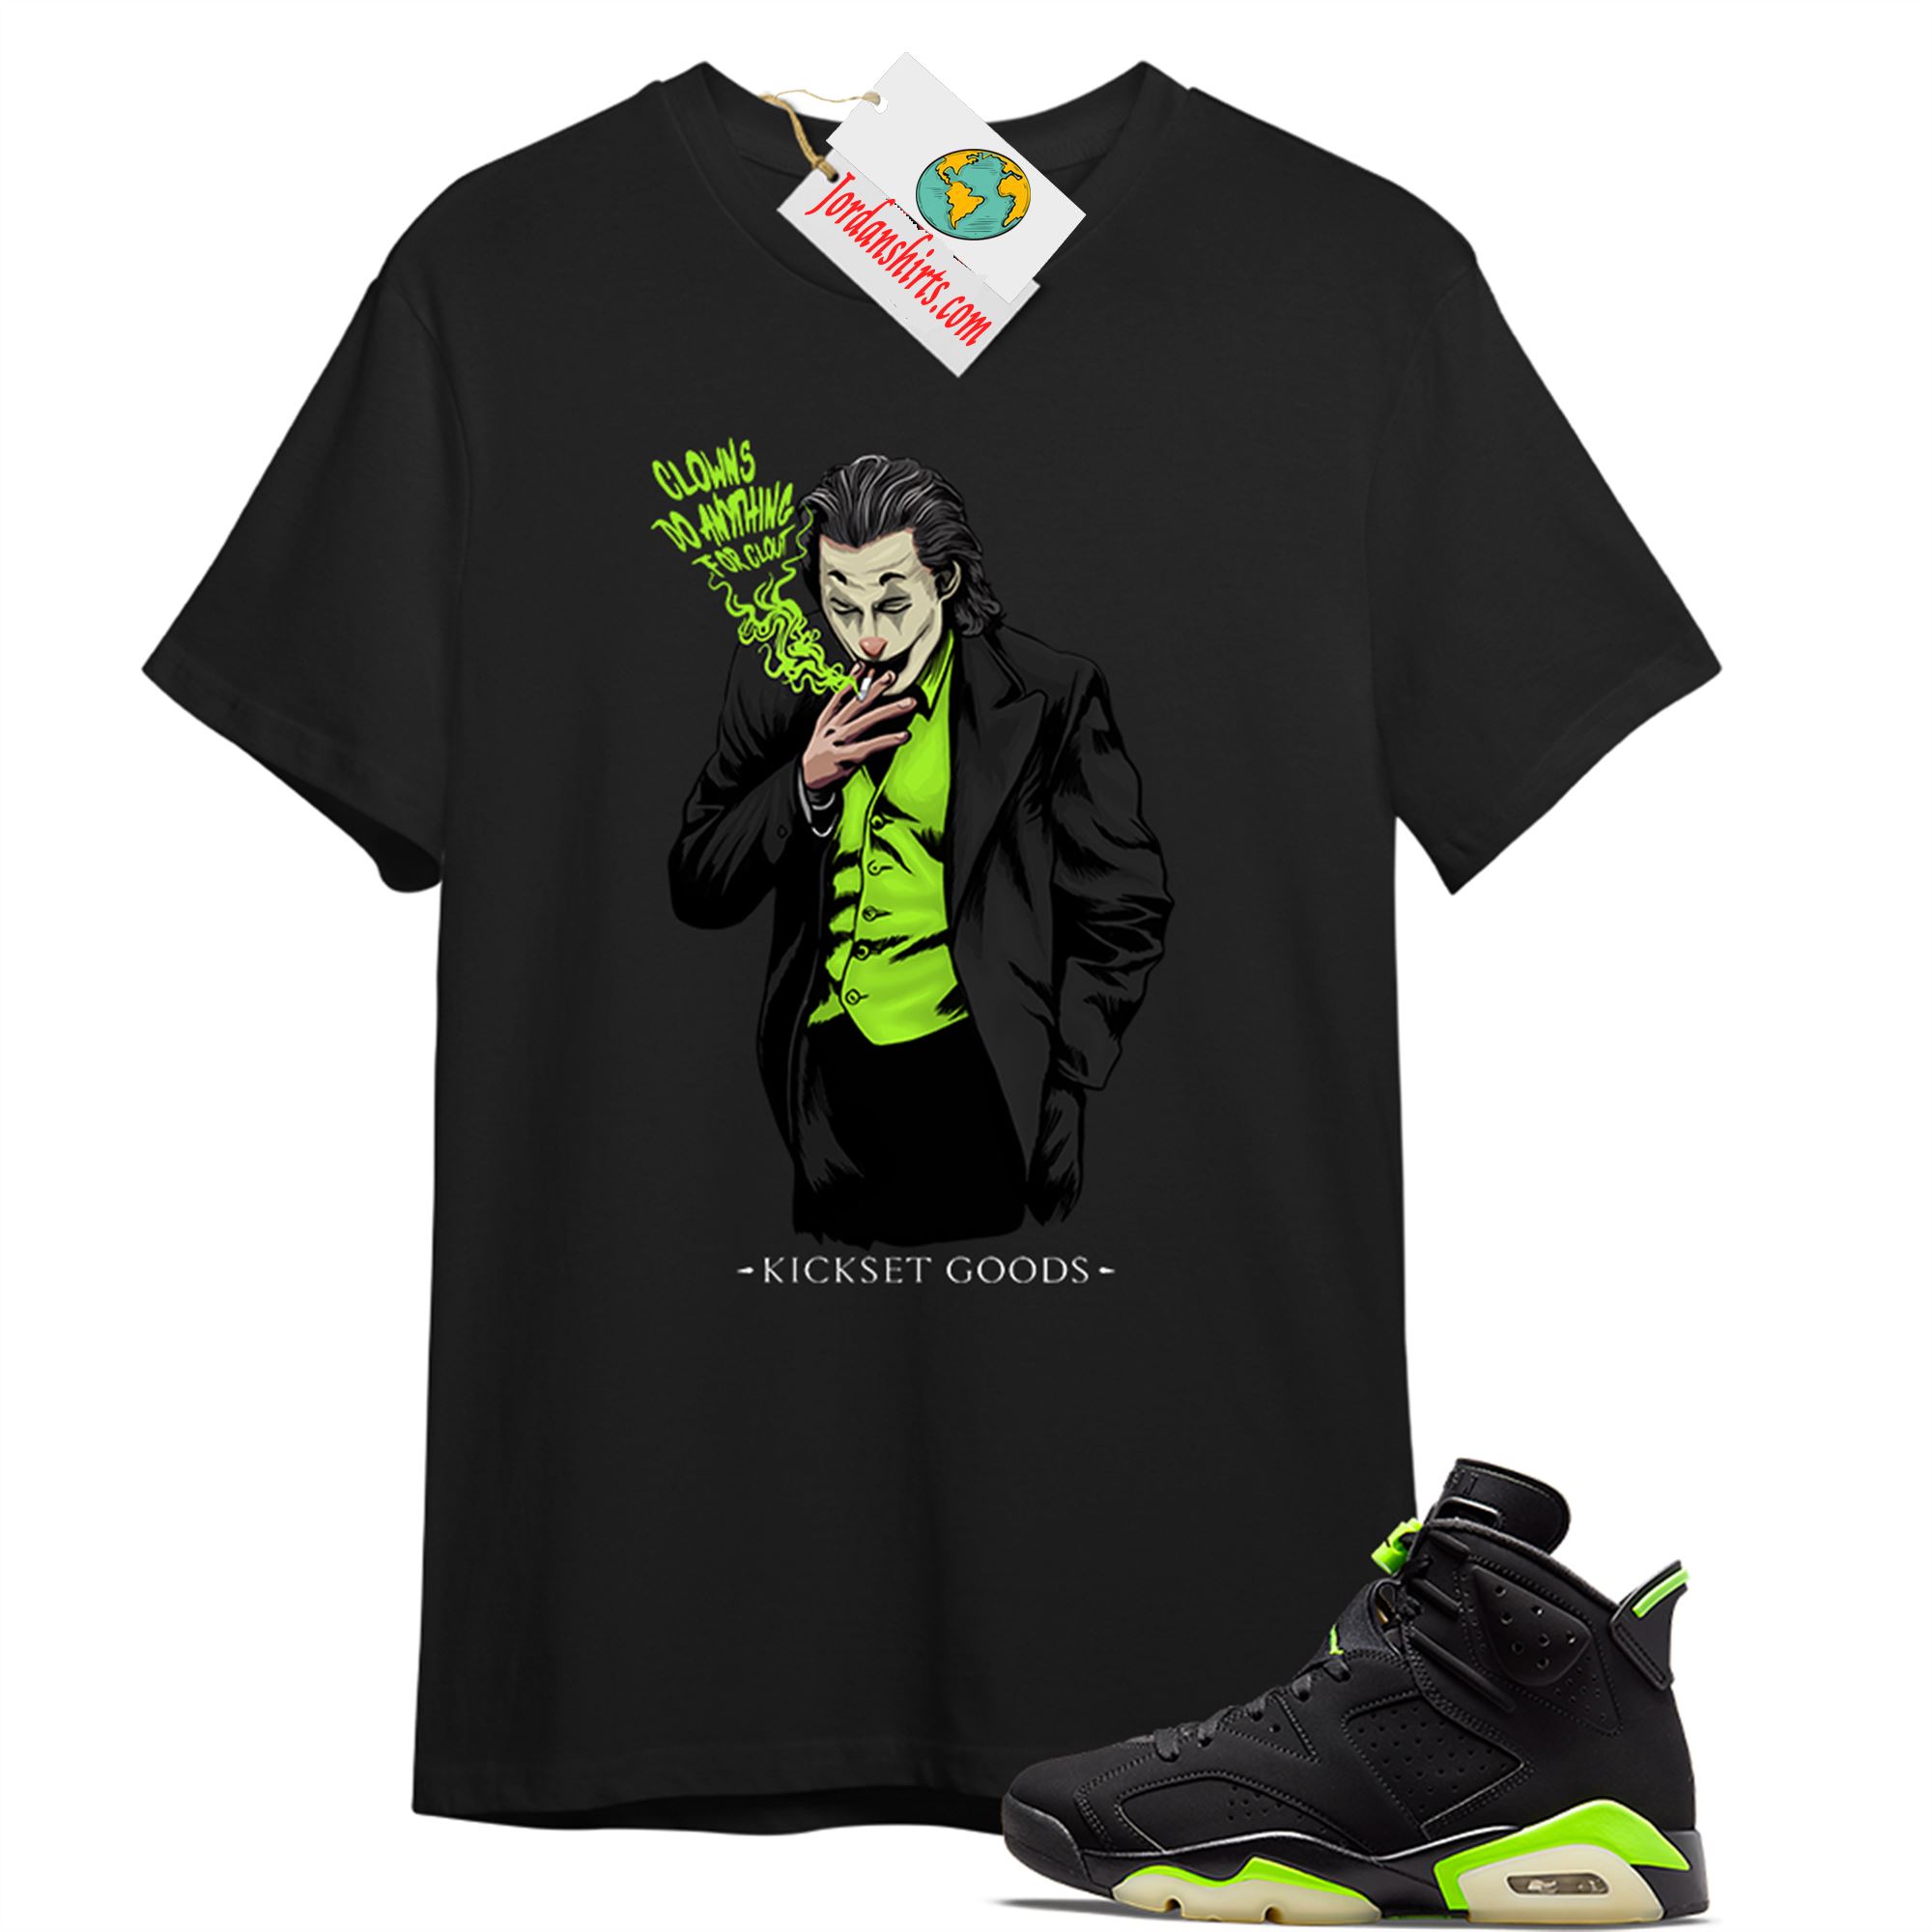 Jordan 6 Shirt, Joker Black T-shirt Air Jordan 6 Electric Green 6s Full Size Up To 5xl